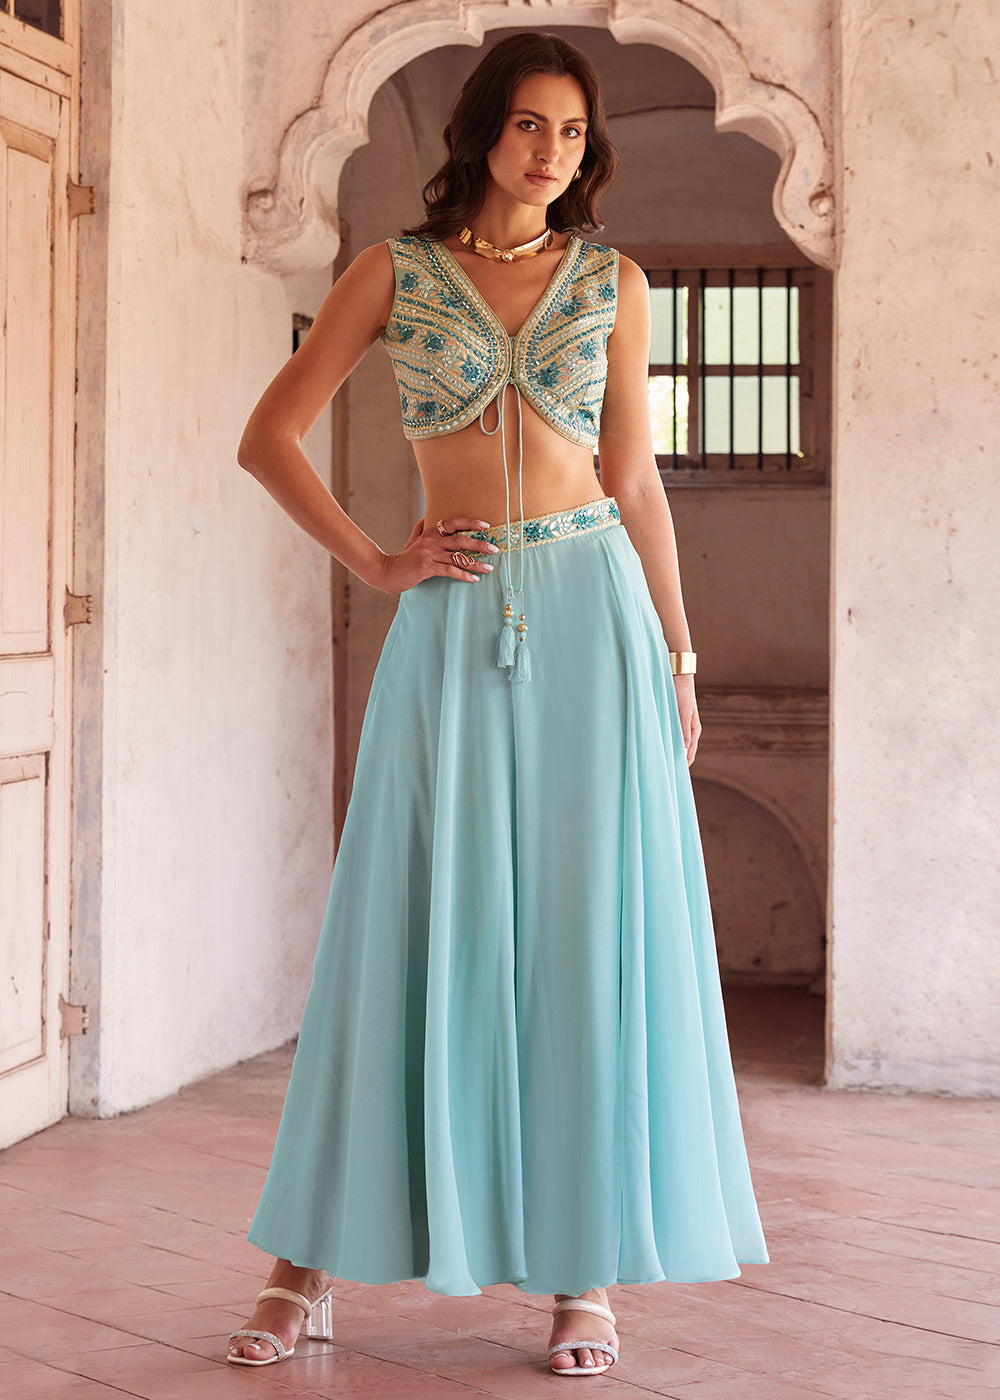 Buy Now Stunning Sky Blue Designer Crop Top Style Lehenga Choli Online in USA, UK, Canada & Worldwide at Empress Clothing. 